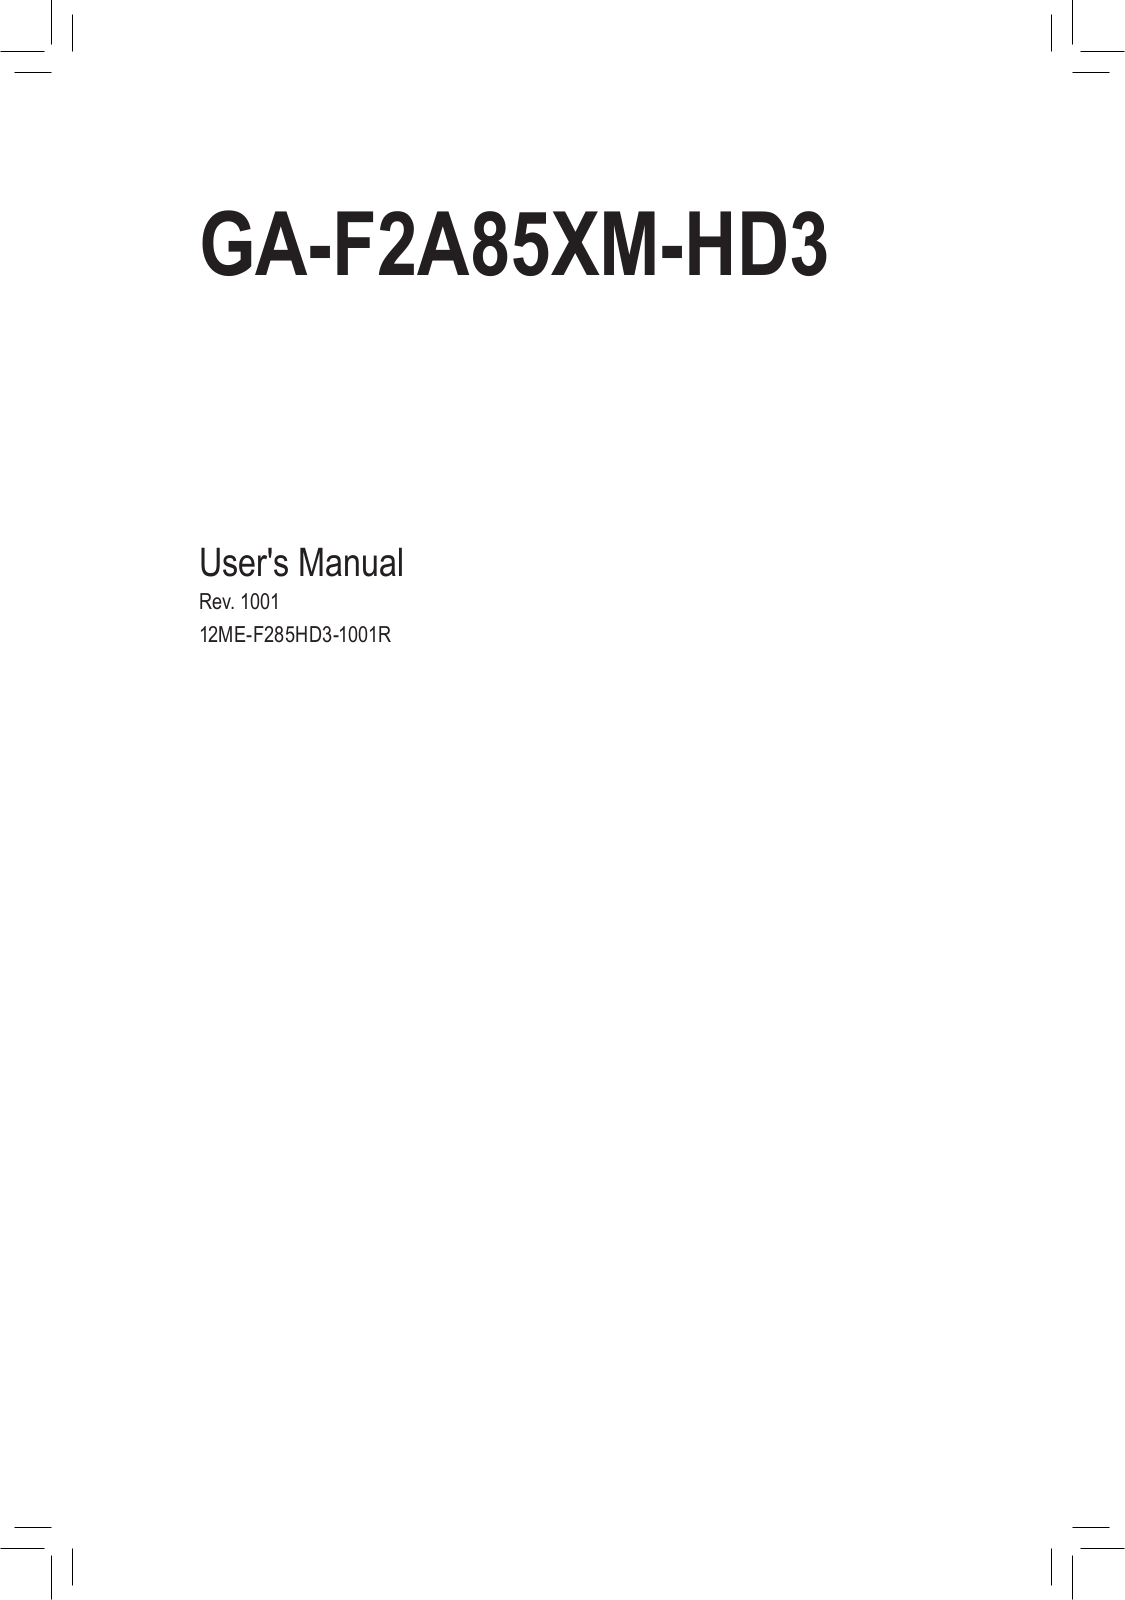 GIGABYTE GA-F2A85XM-HD3 Owner's Manual